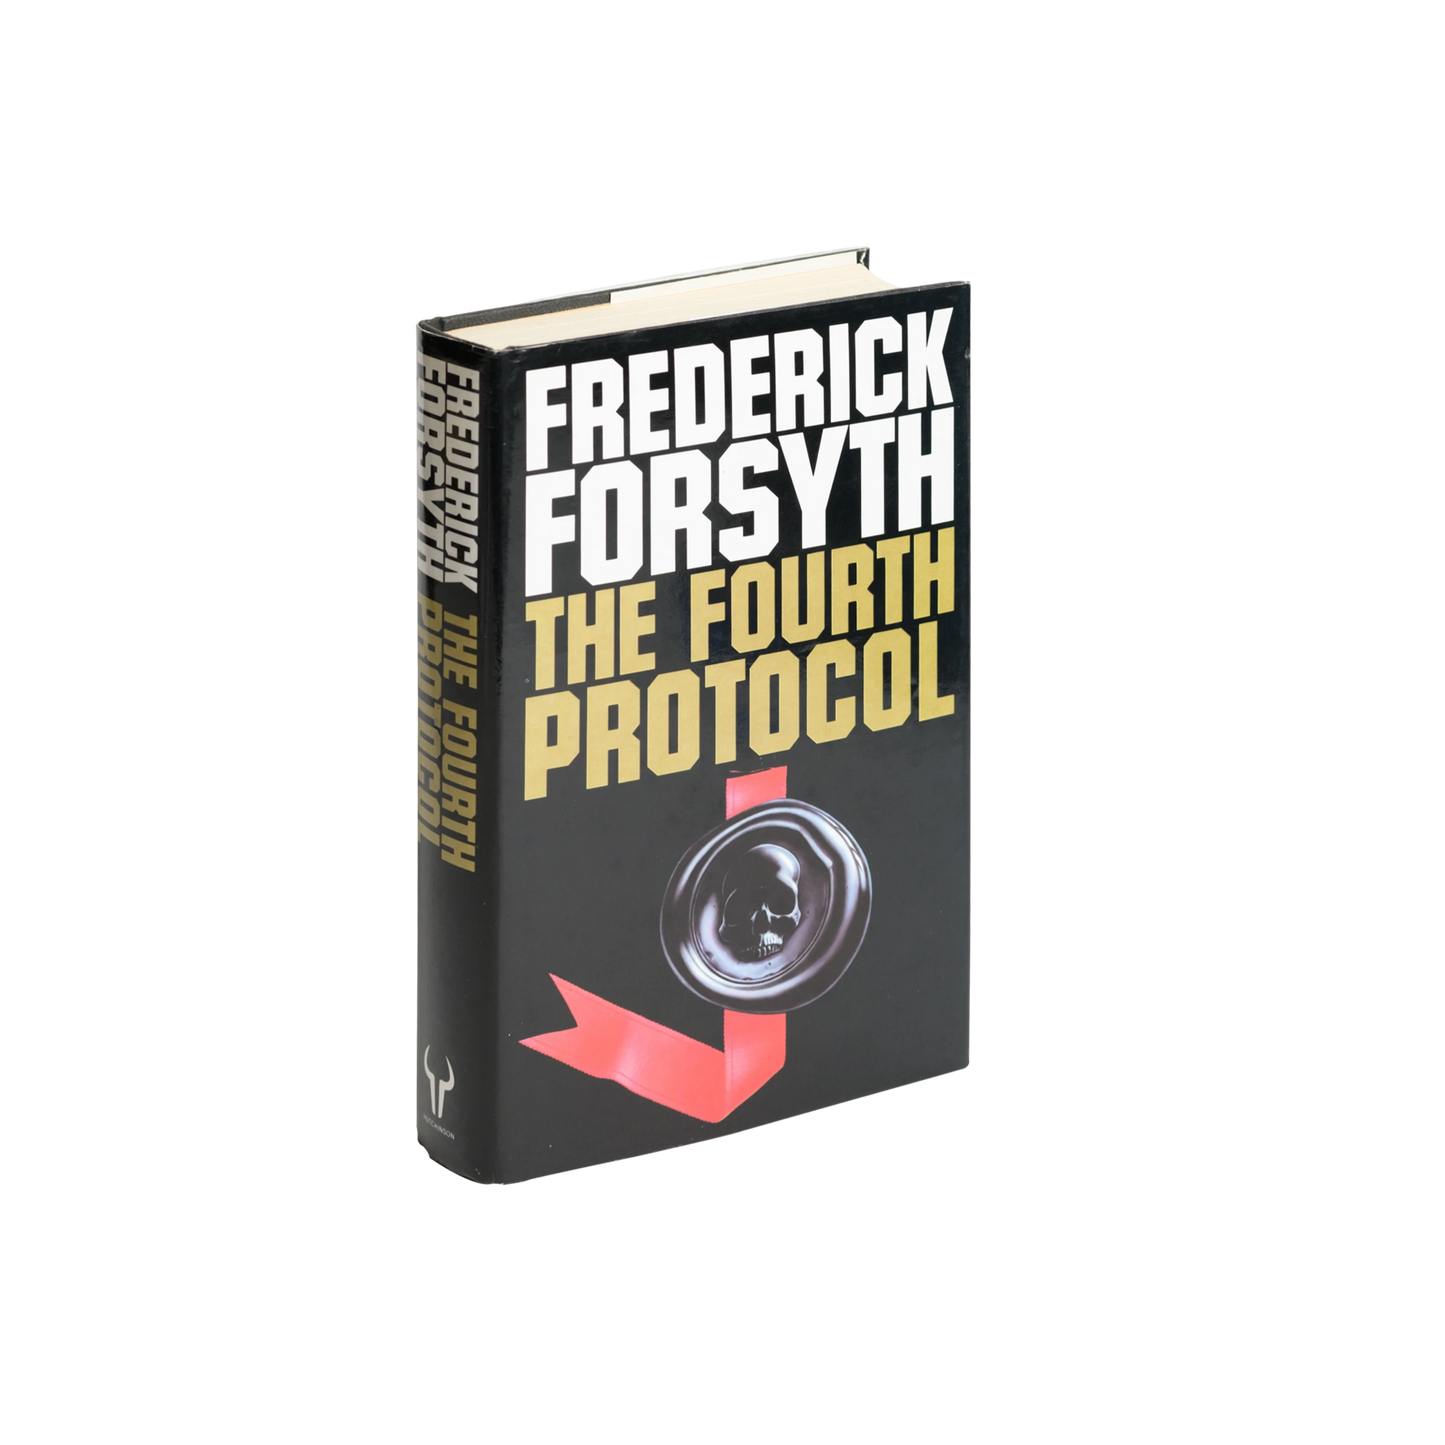 The Fourth Protocol - 